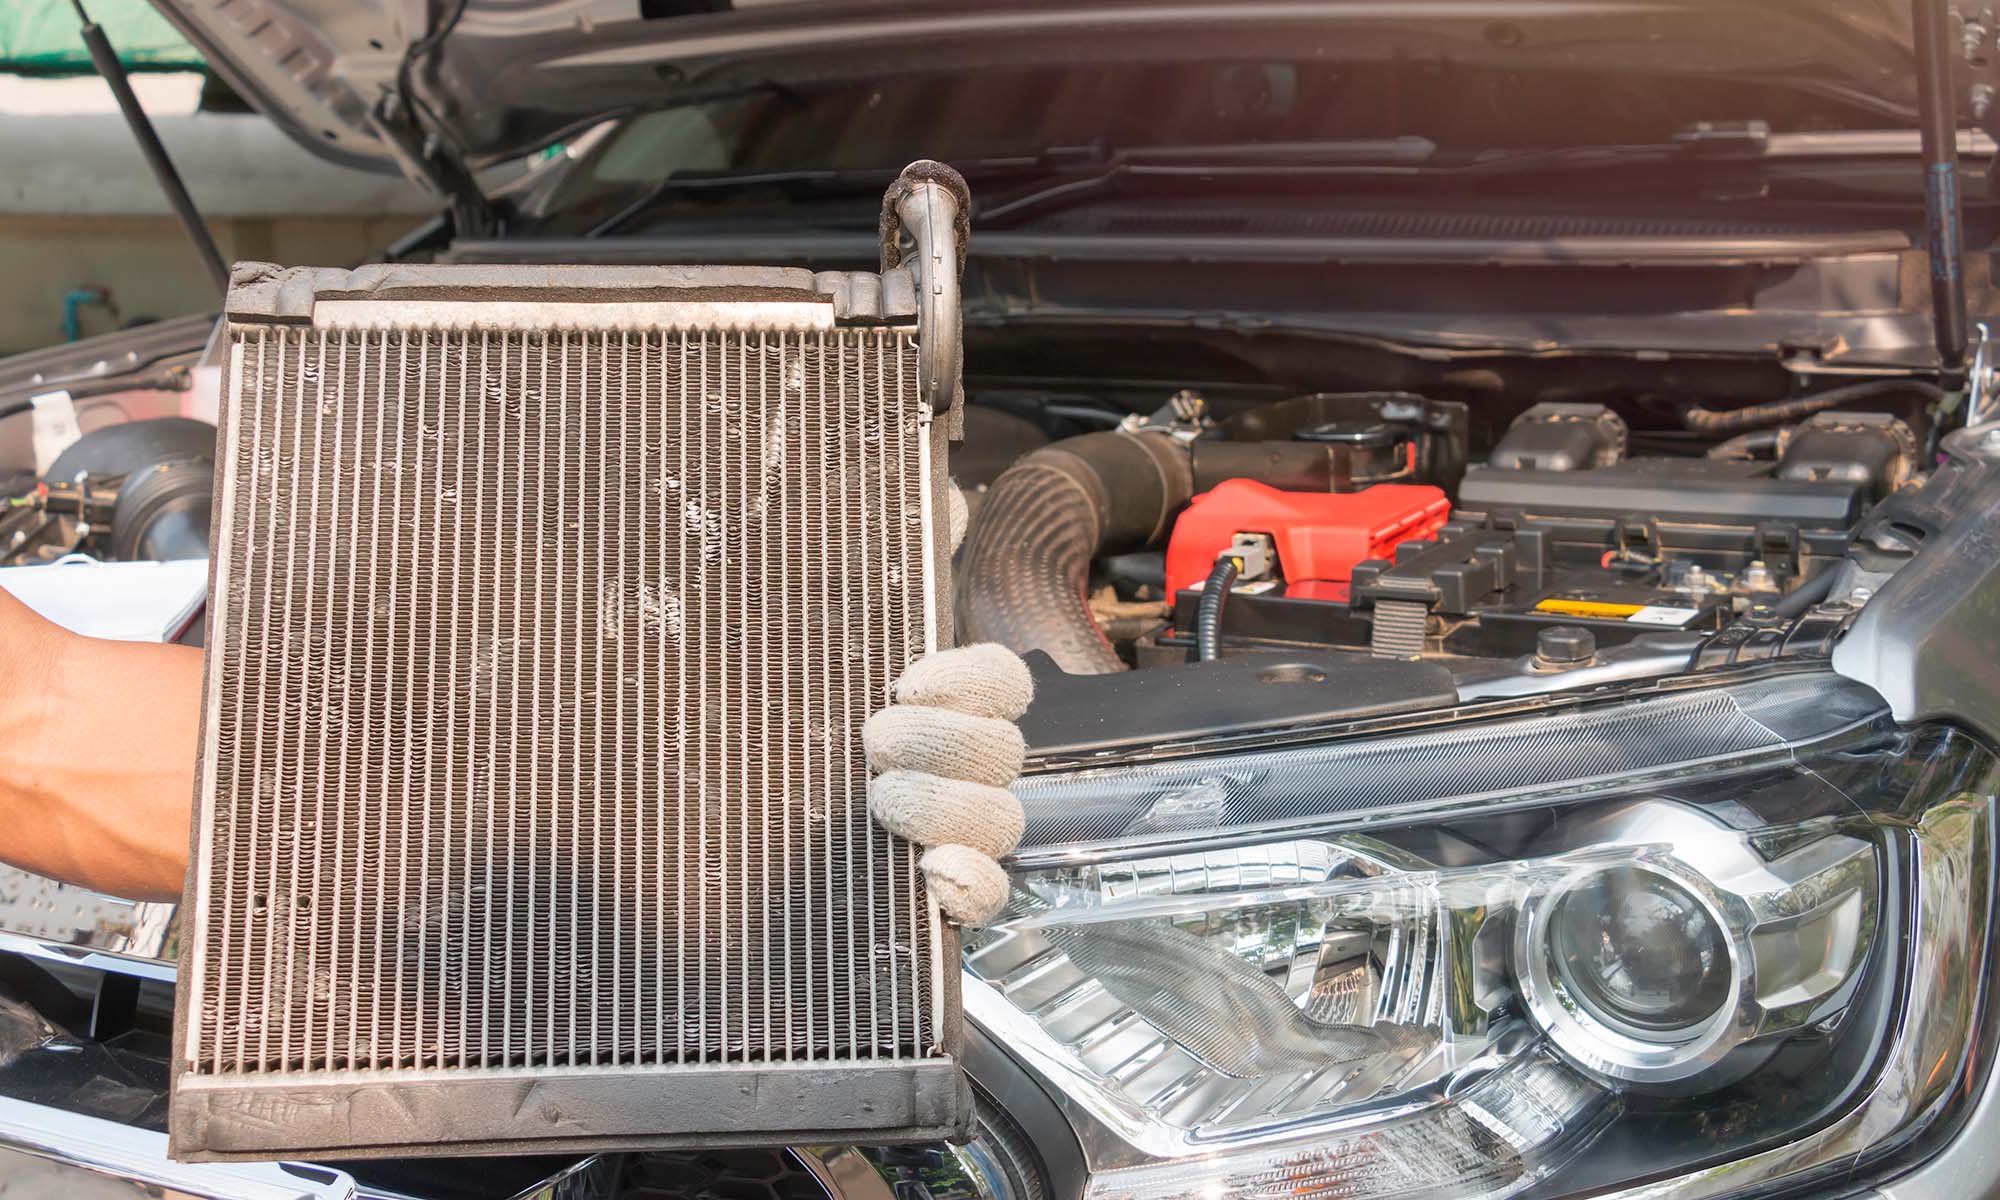 A mechanic holding up a car's radiator.